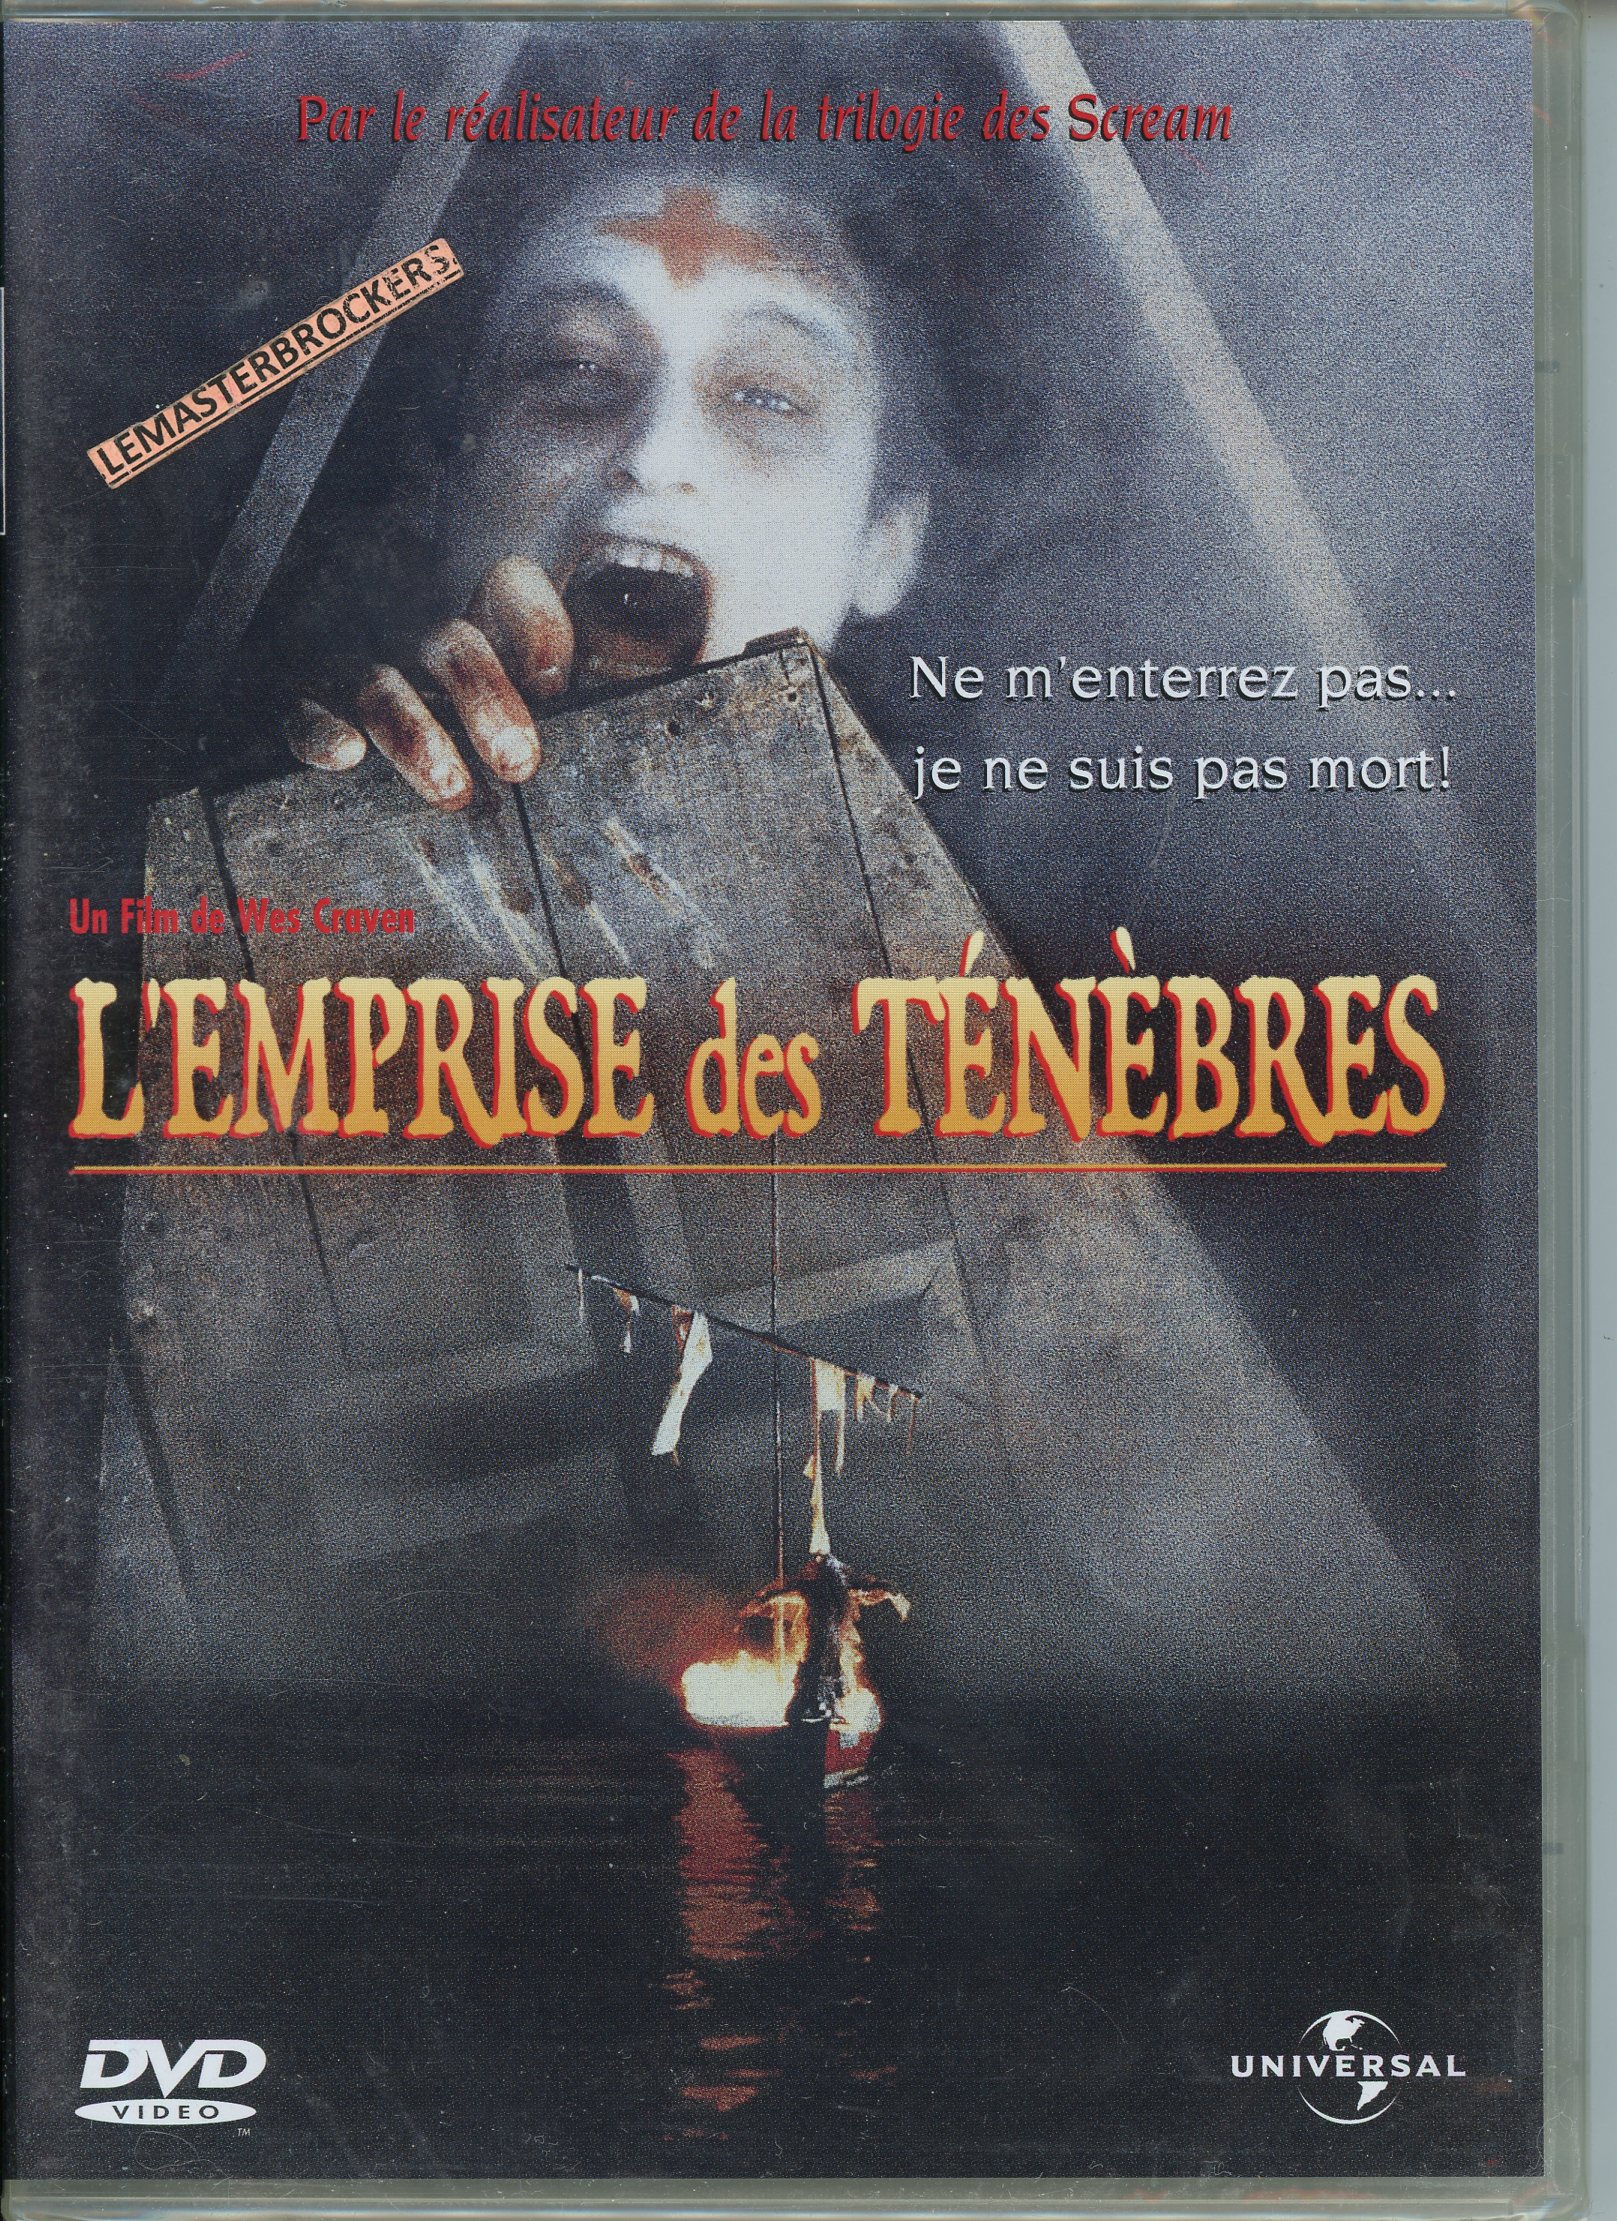 DVD-EMPRISE-DES-TÉNÈBRES-3700173218383-LEMASTERBROCKERS